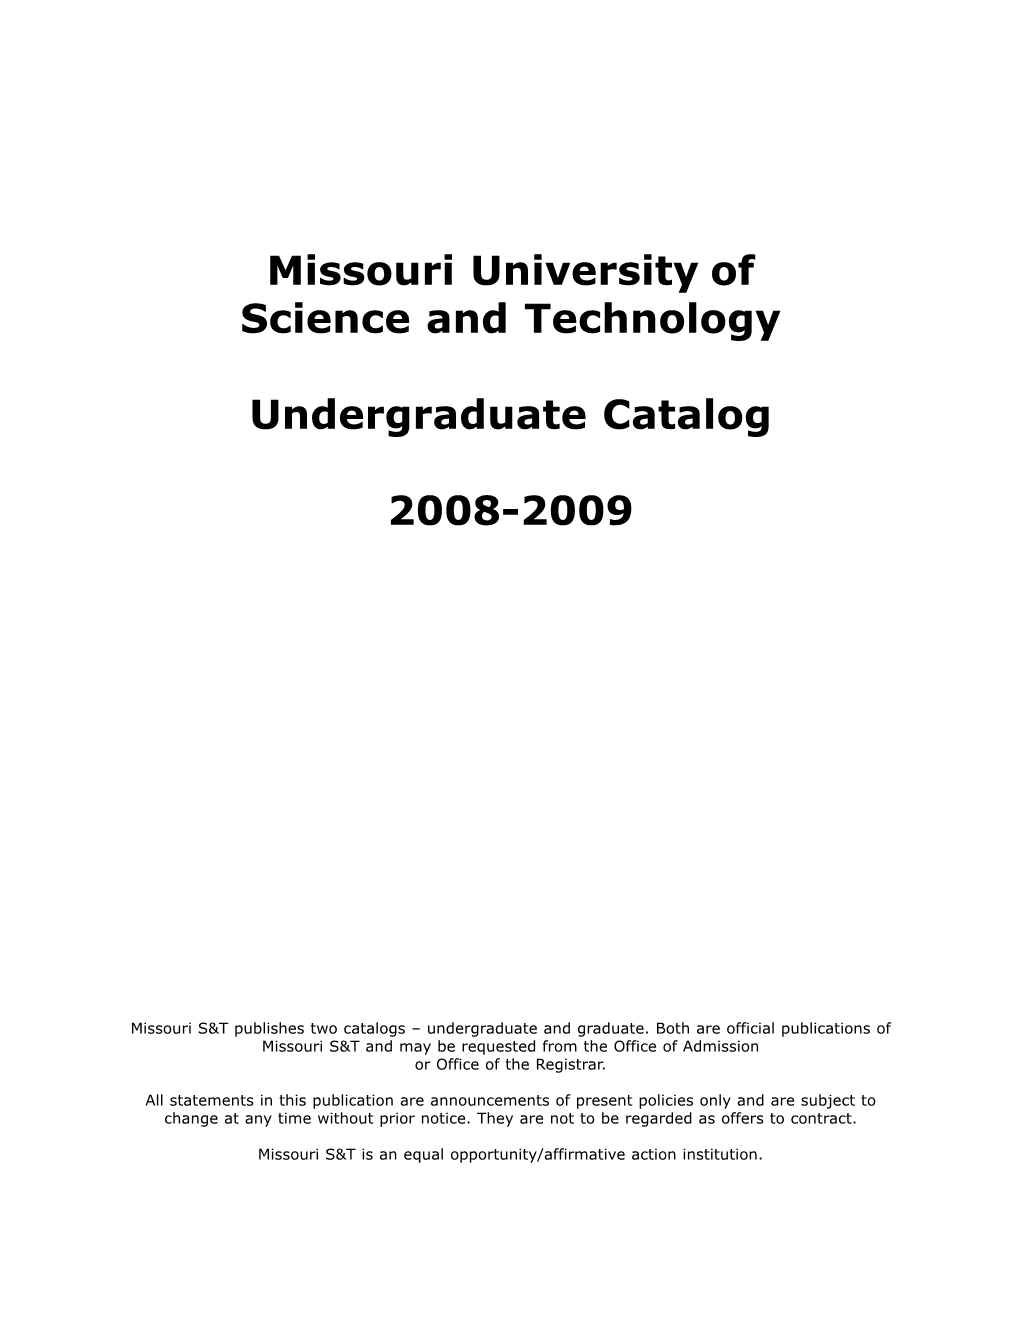 Missouri University of Science and Technology Undergraduate